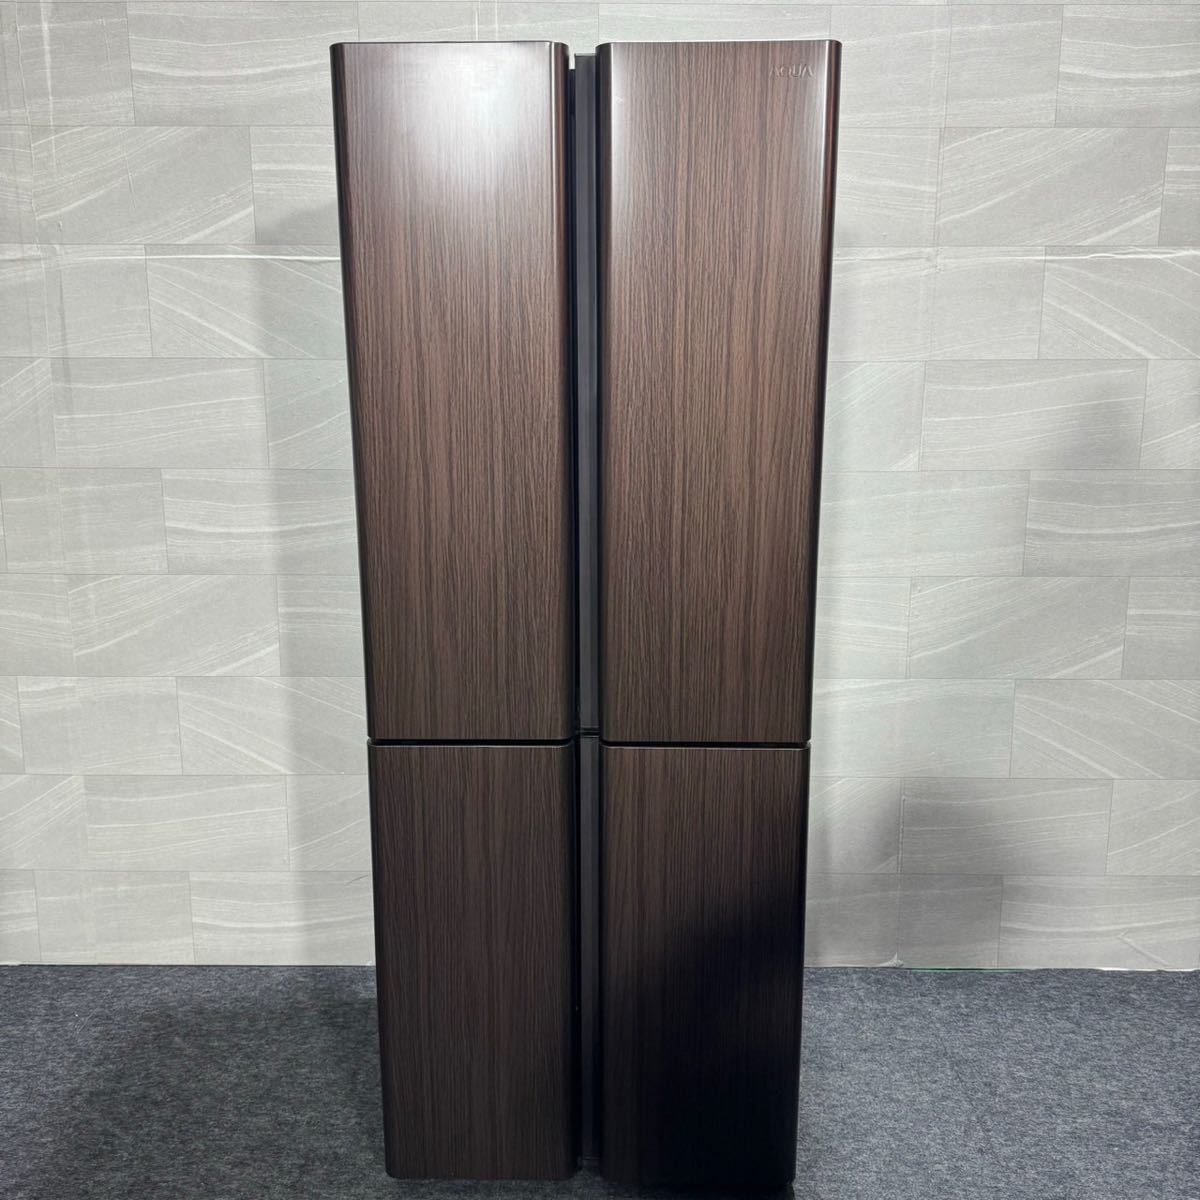 AQUA 大容量冷蔵庫 AQR-TZ42K 420L 4ドア 高年式d1616 アクア 大型冷蔵庫 観音開き フレンチドア 大きめ 新しい_画像2